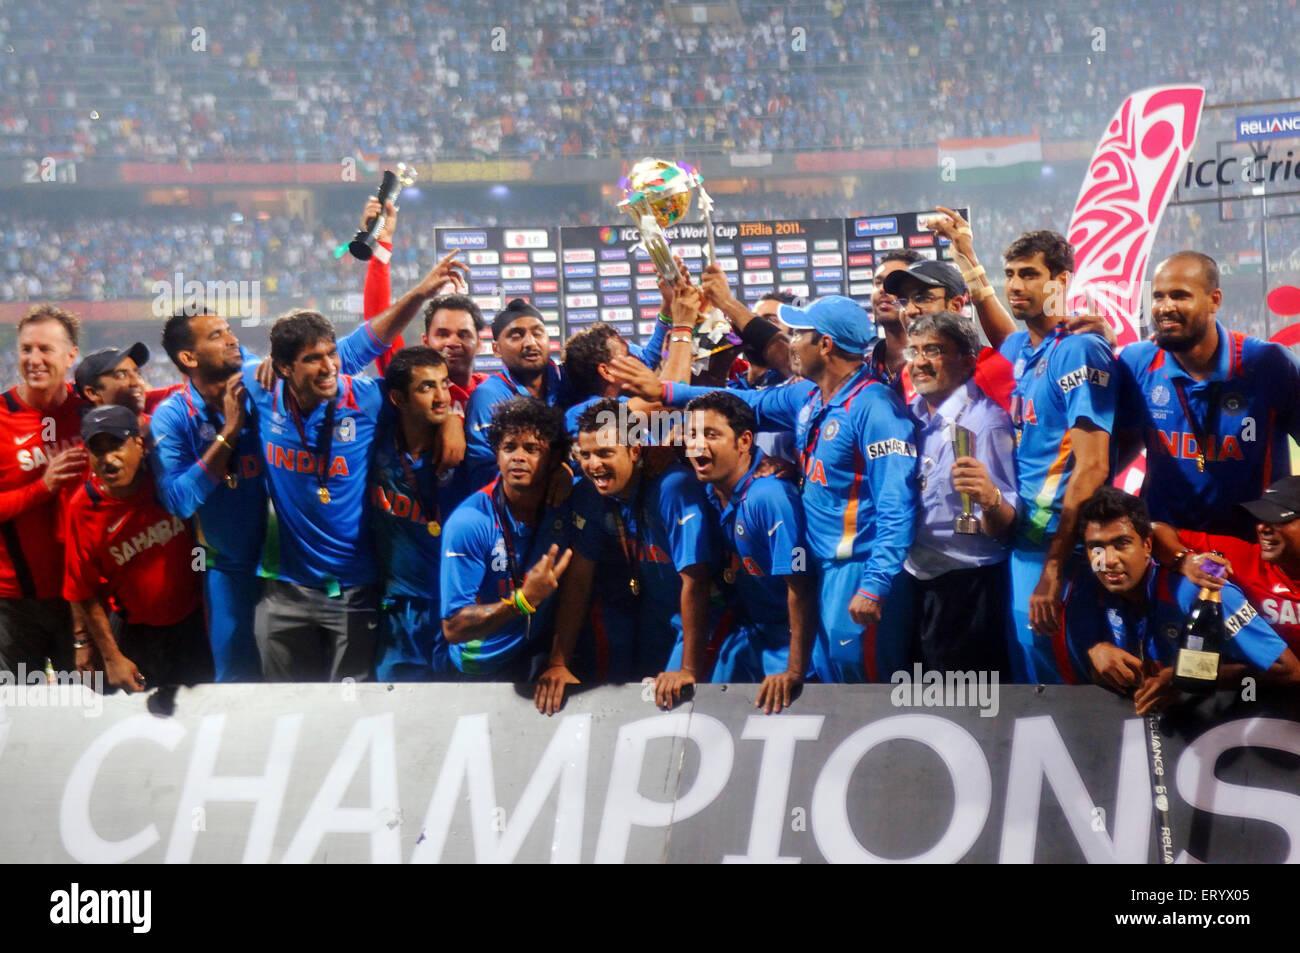 Cricketers celebrate trophy beating Sri Lanka ICC Cricket World Cup 2011 final match Wankhede Stadium Mumbai India Stock Photo